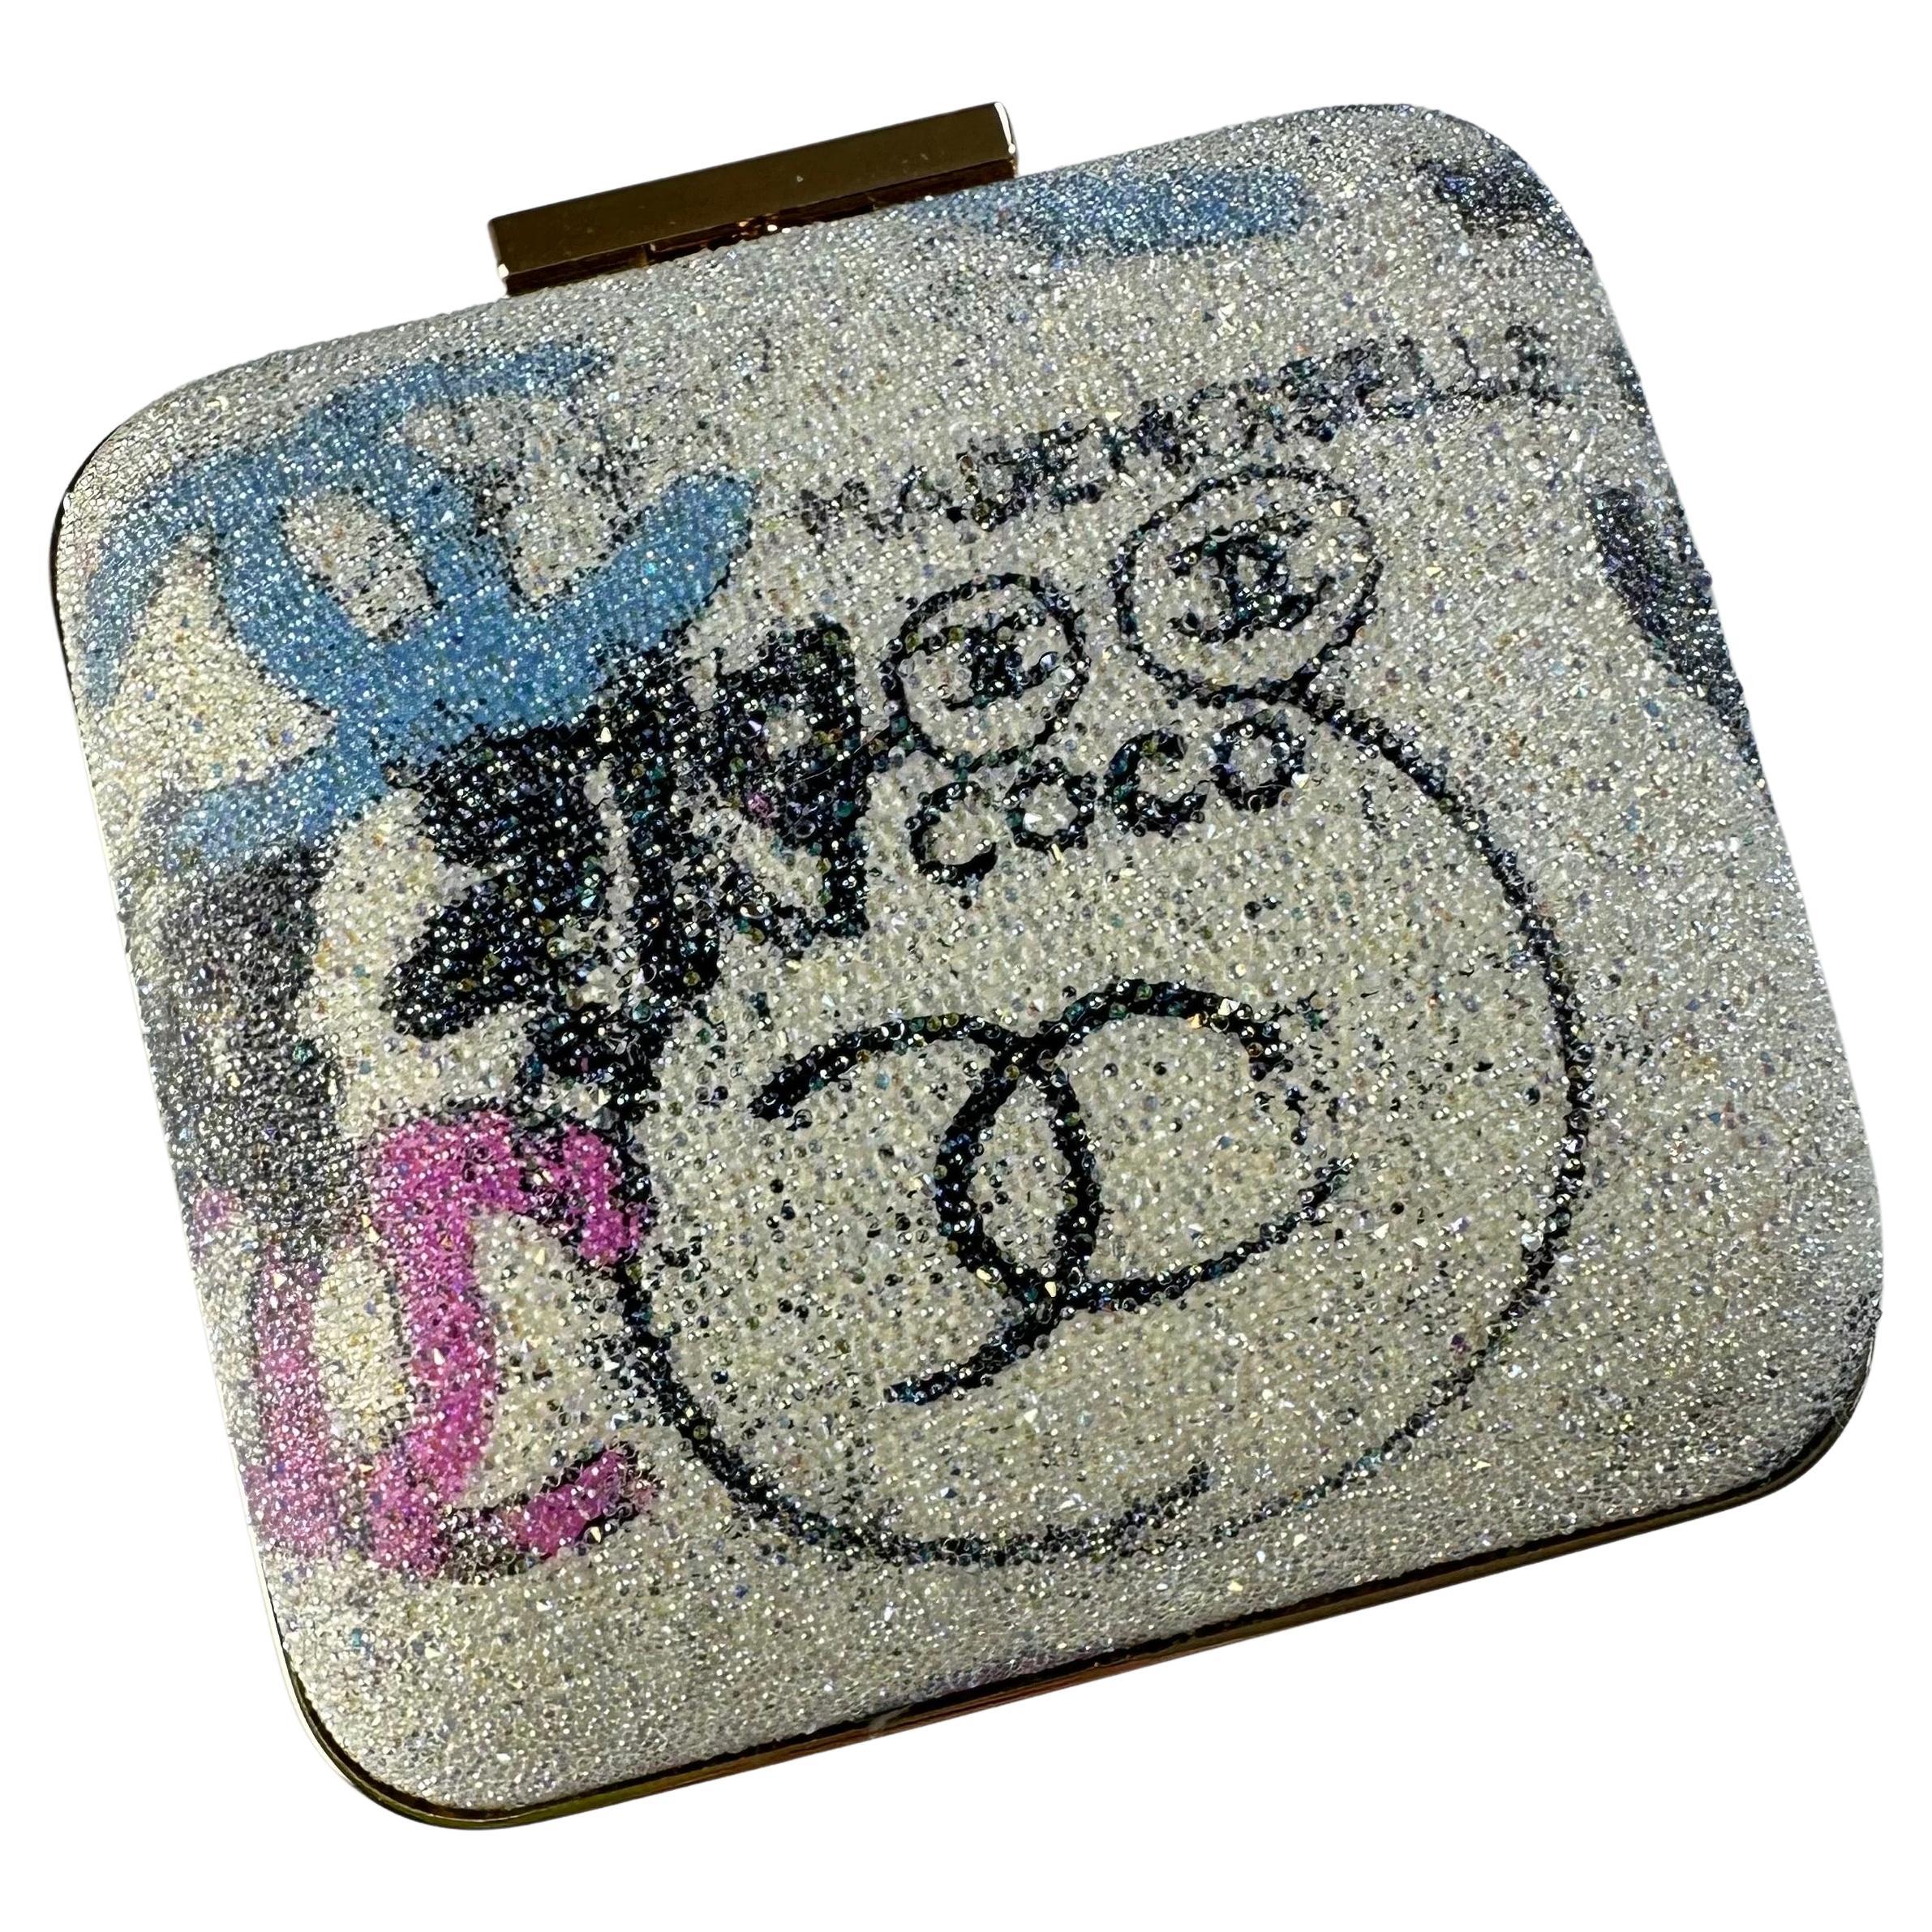 Chanel 2007 Vintage Iridescent Strass Graffiti Rare Minaudière Clutch Bag For Sale 6